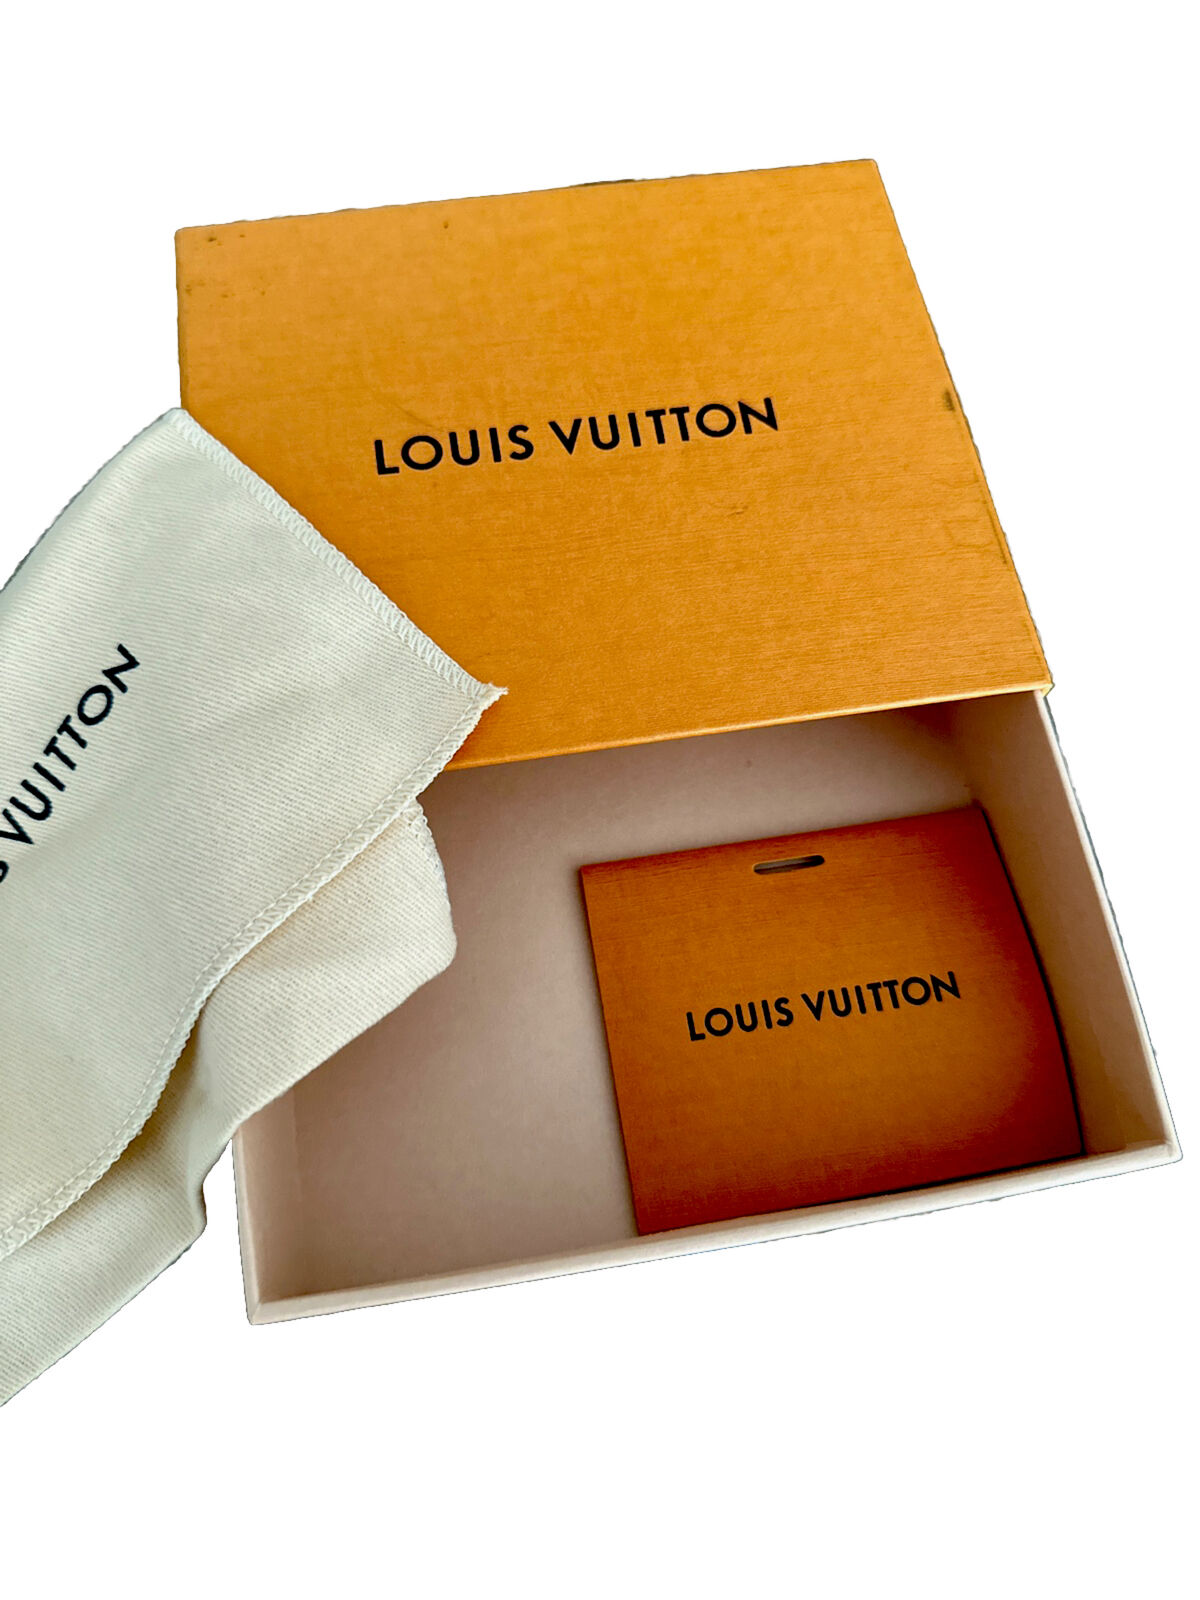 Shop Louis Vuitton MONOGRAM 2022 SS Passport cover (N64411, M64501